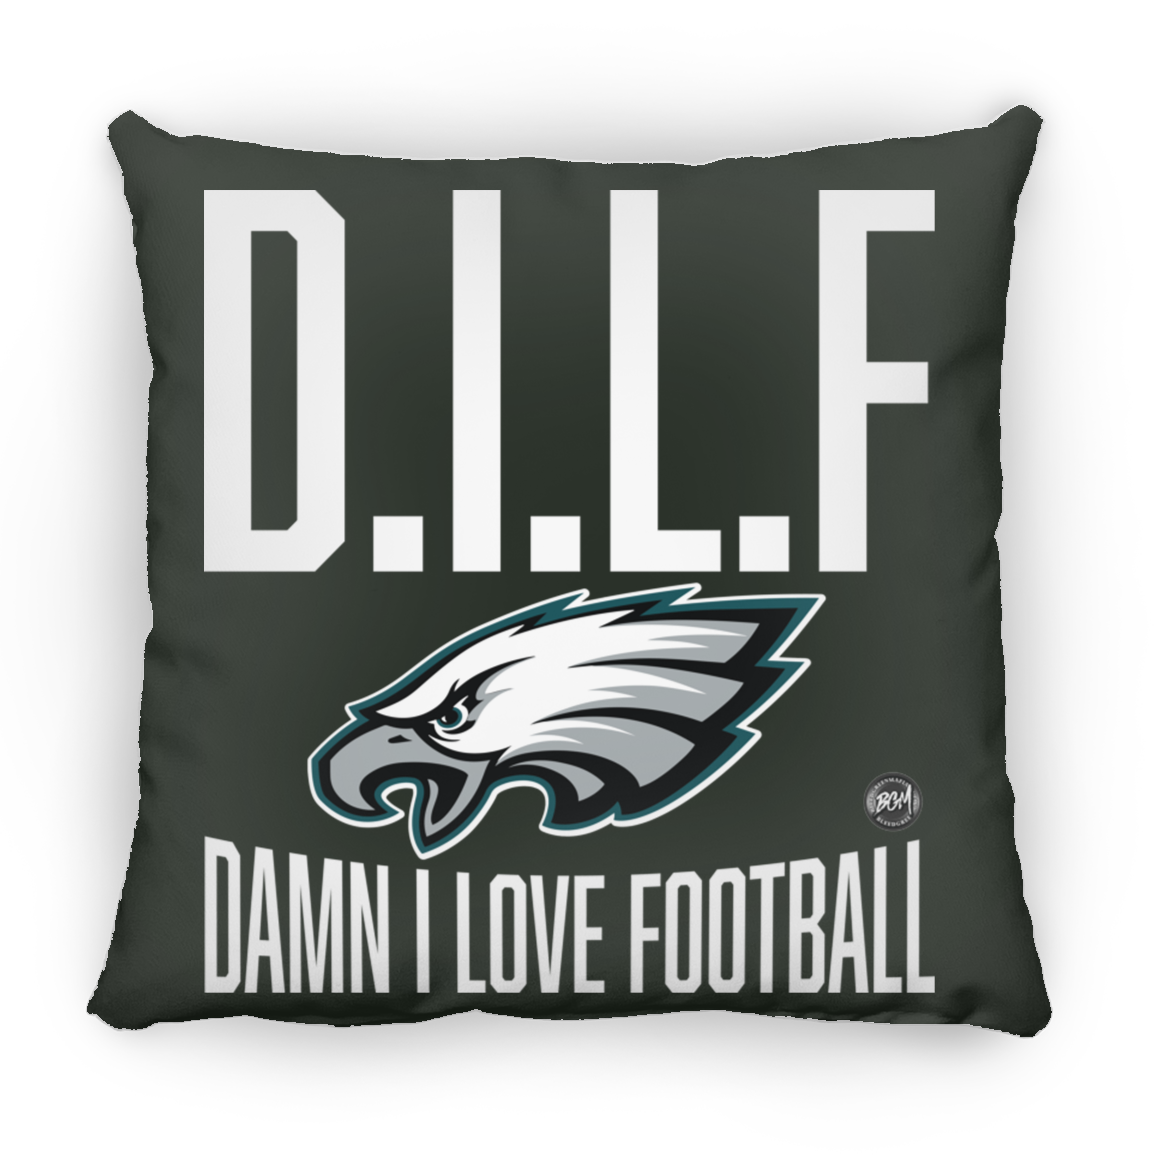 D.I.L.F | Damn I Love Football Large Square Pillow | www.BleedGreenMafia.com